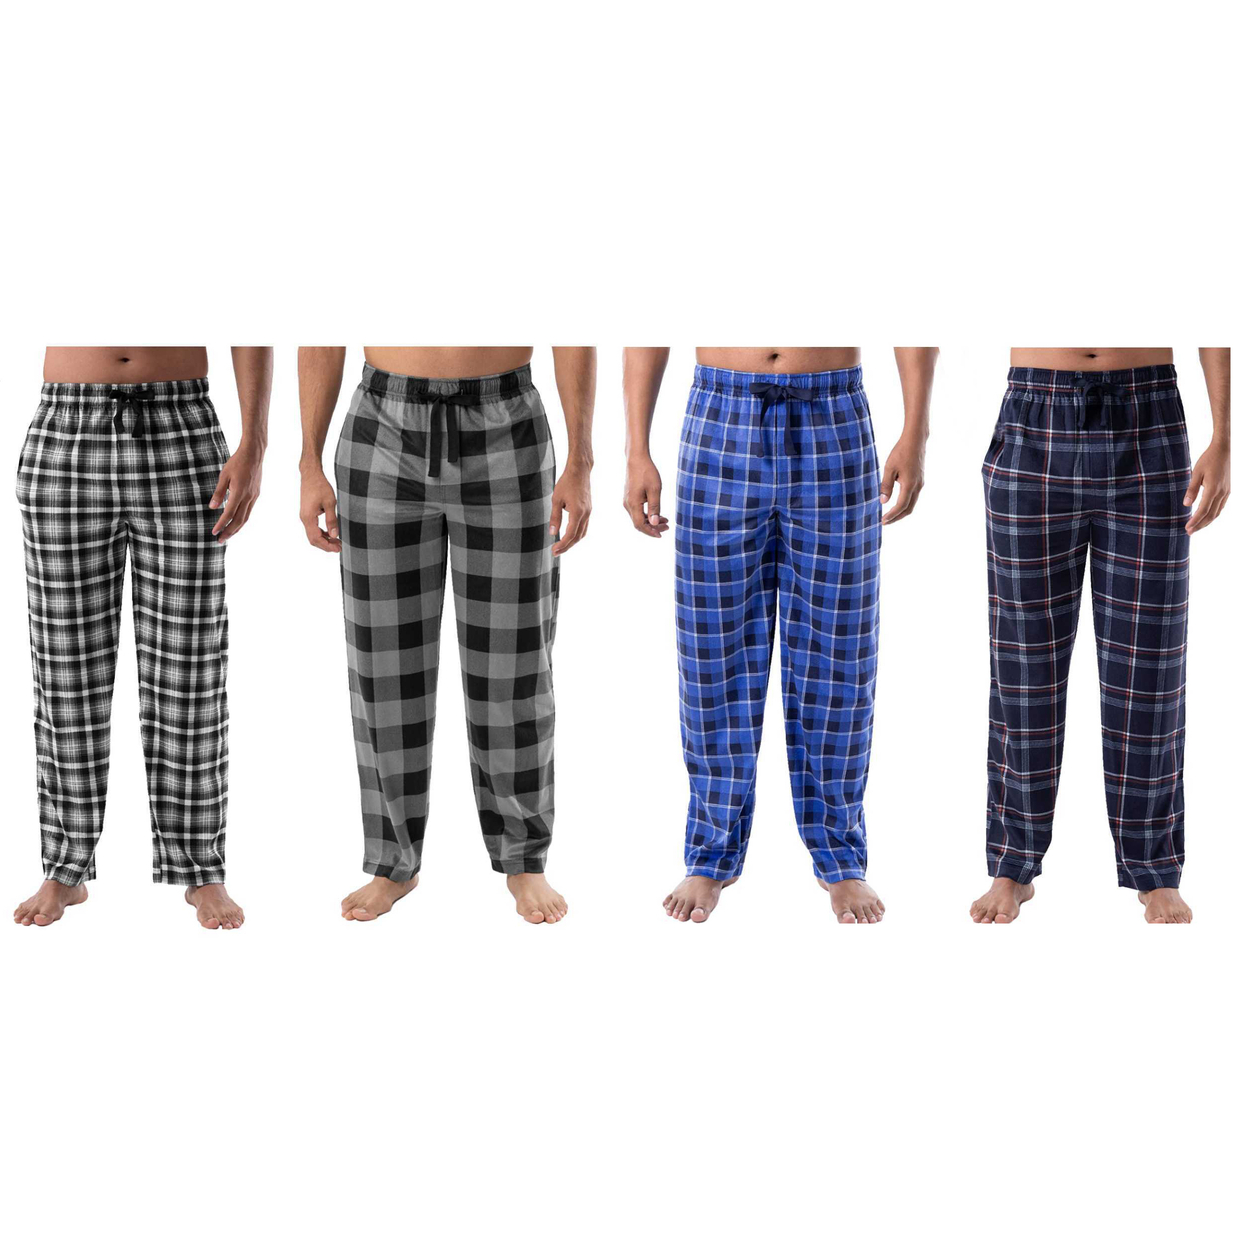 4-Pack: Men's Ultra-Soft Cozy Lounge Sleep Micro Fleece Plaid Pajama Pants - Small